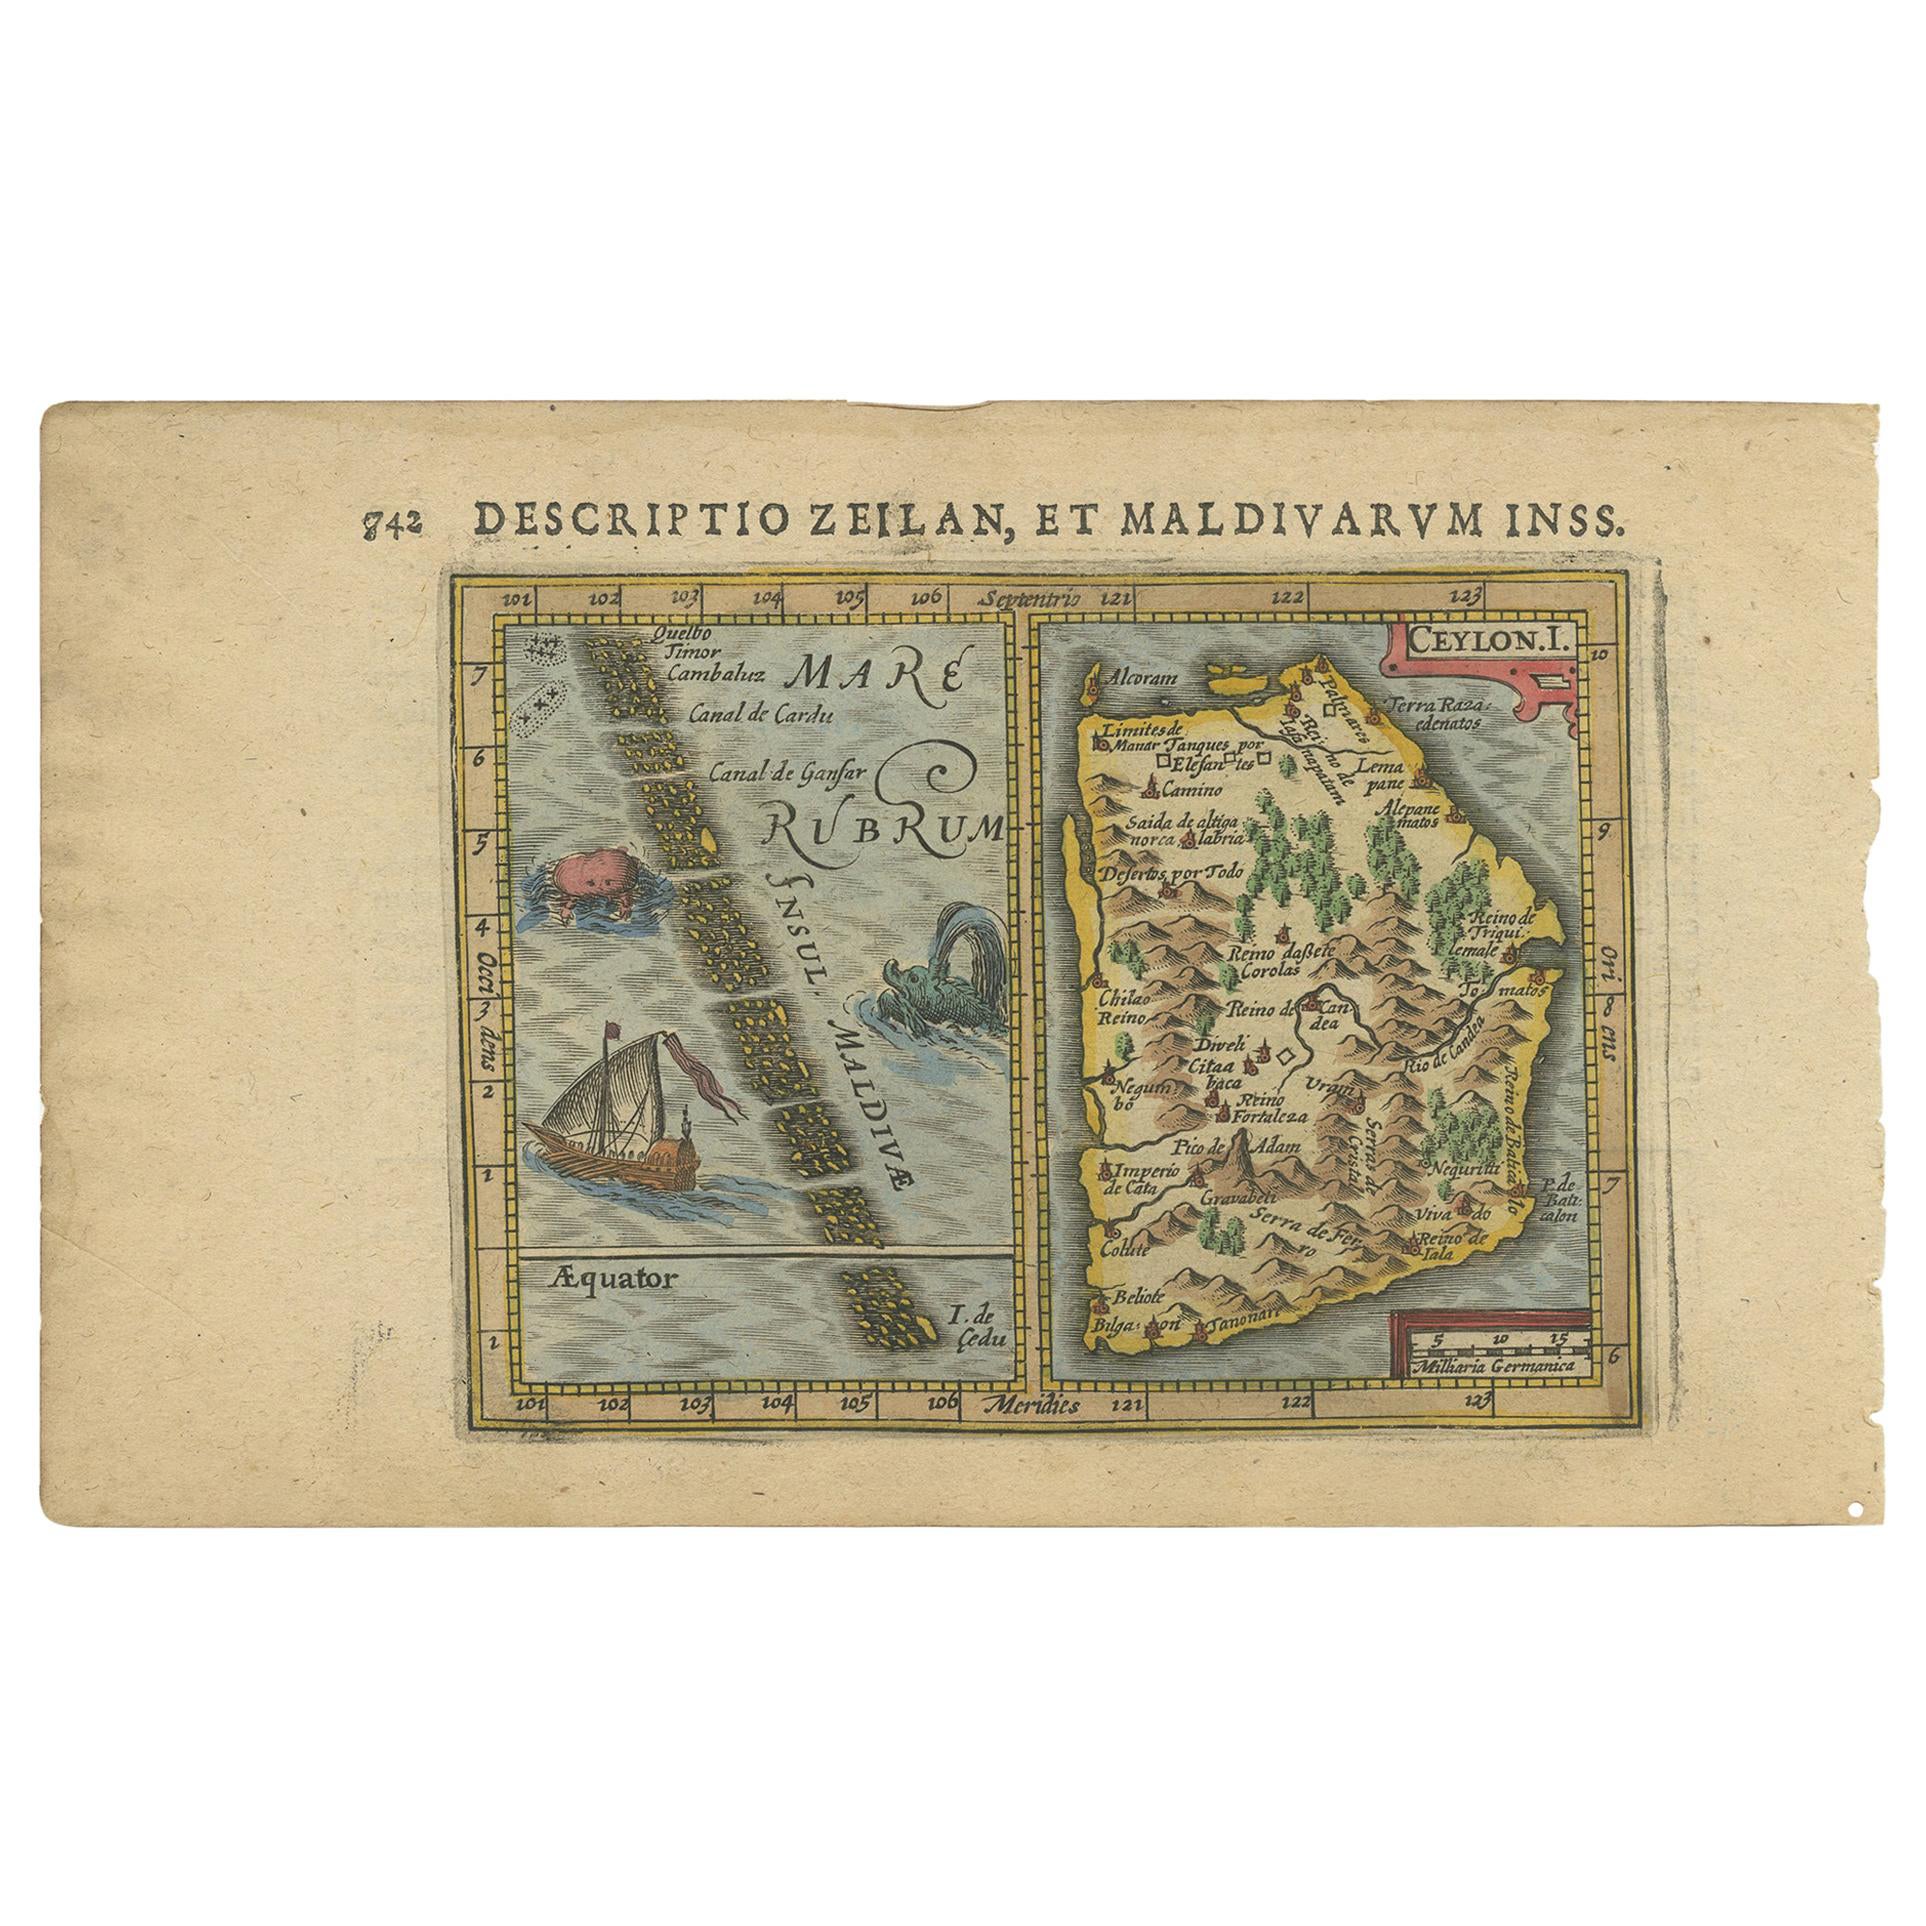 Antique Miniature Map of Ceylon 'Sri Lanka' and the Maldives by Bertius, 1618